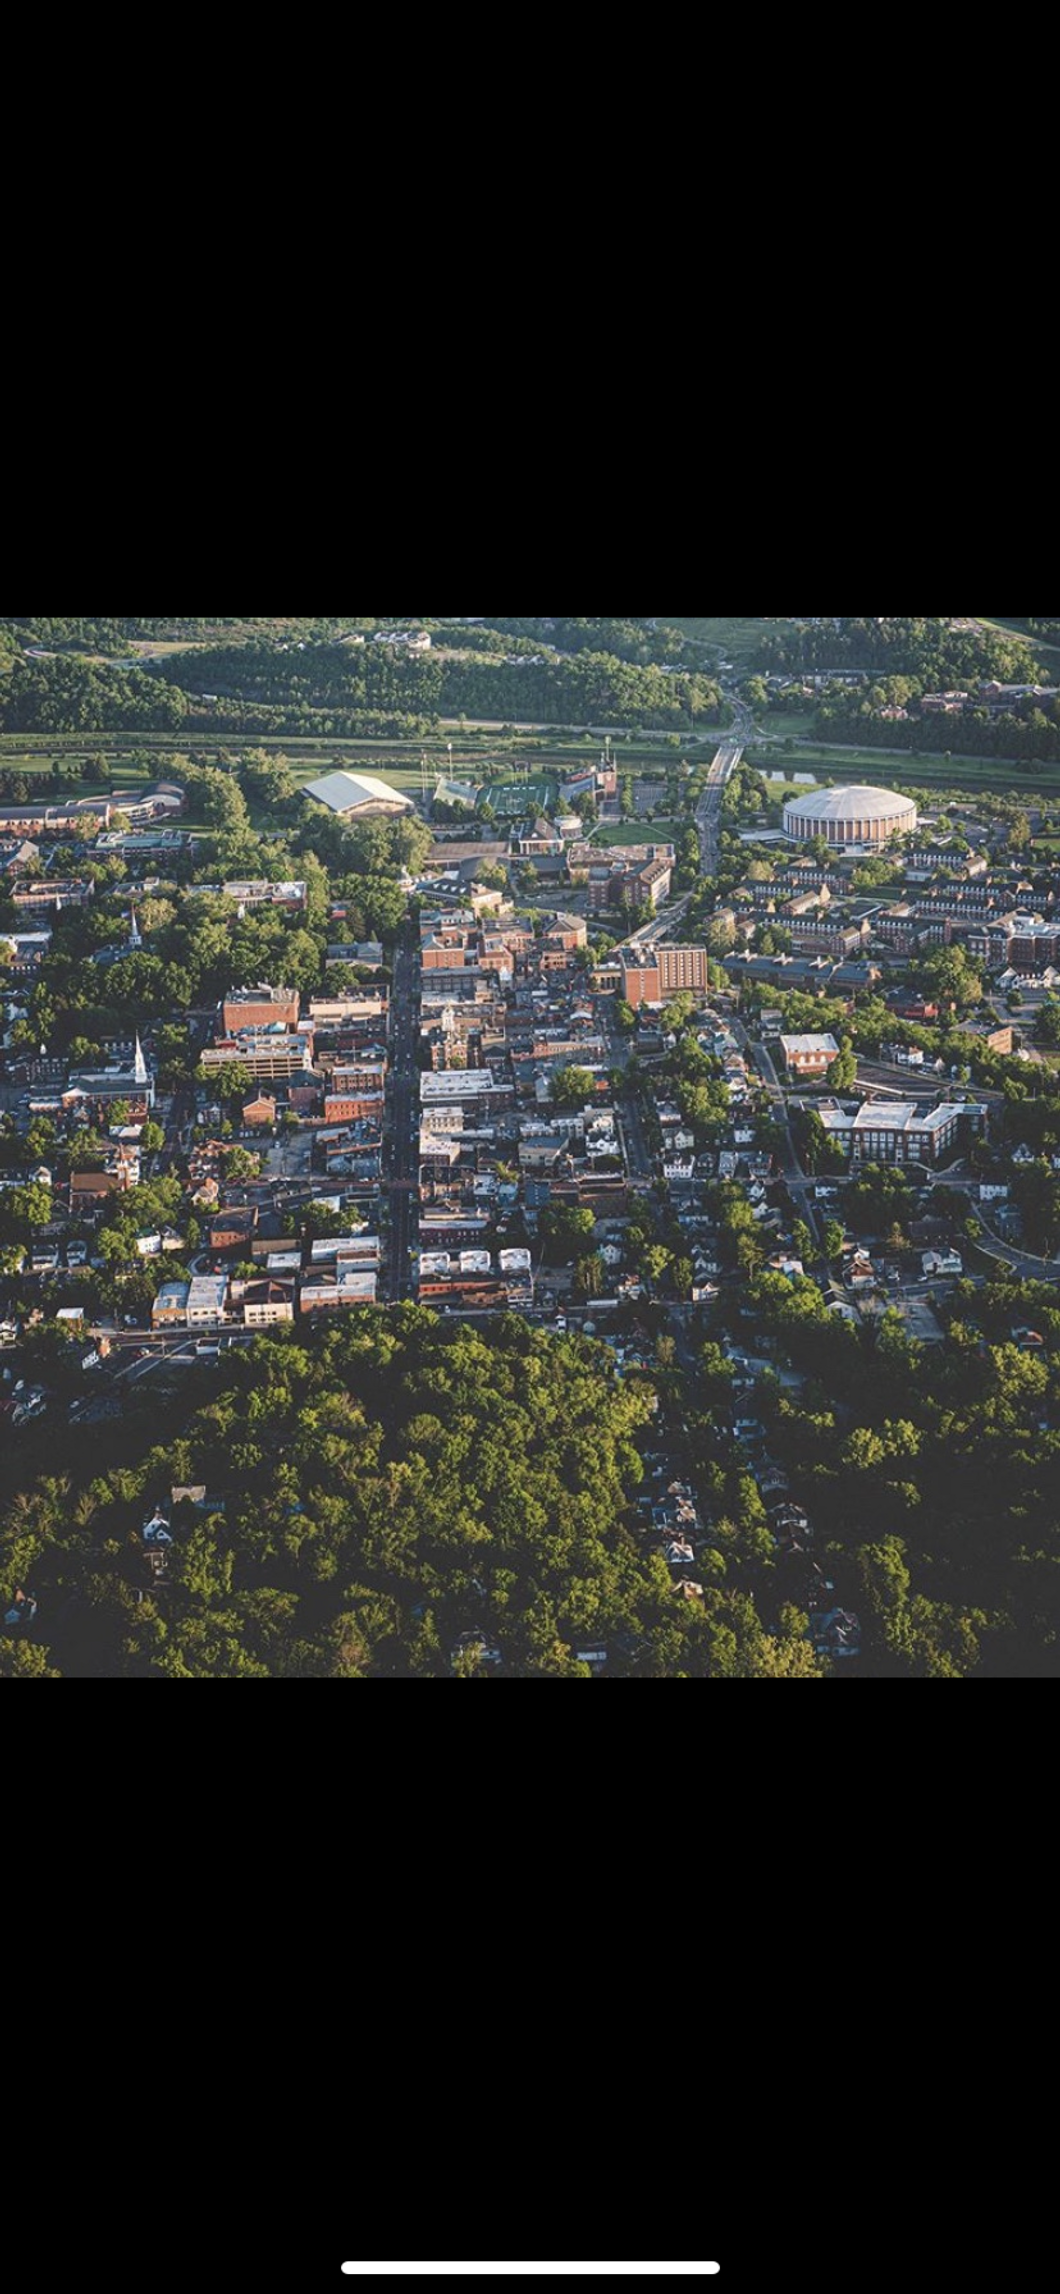 6 Best Dorms For Ohio University Freshmen To Live In